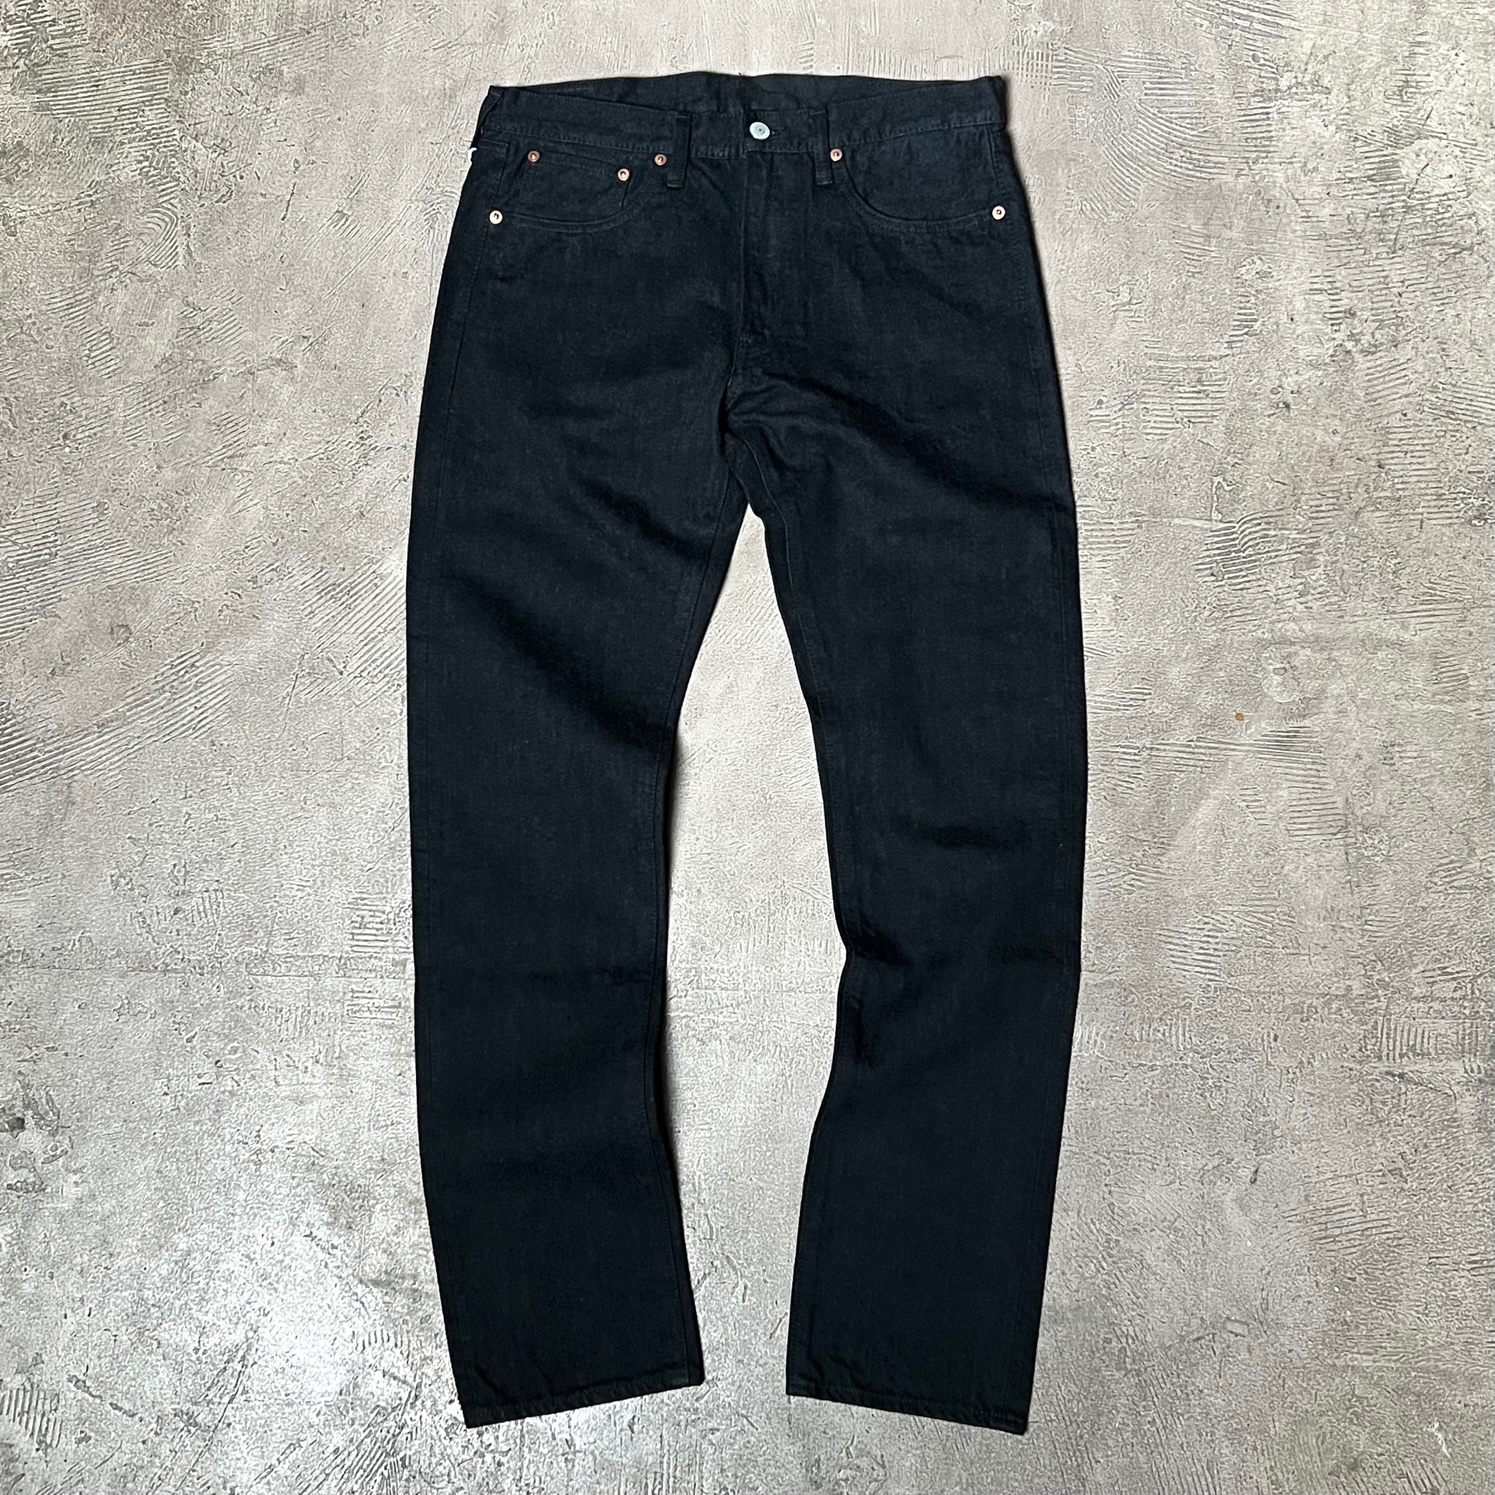 5 Poket Jeans / Slim Fit